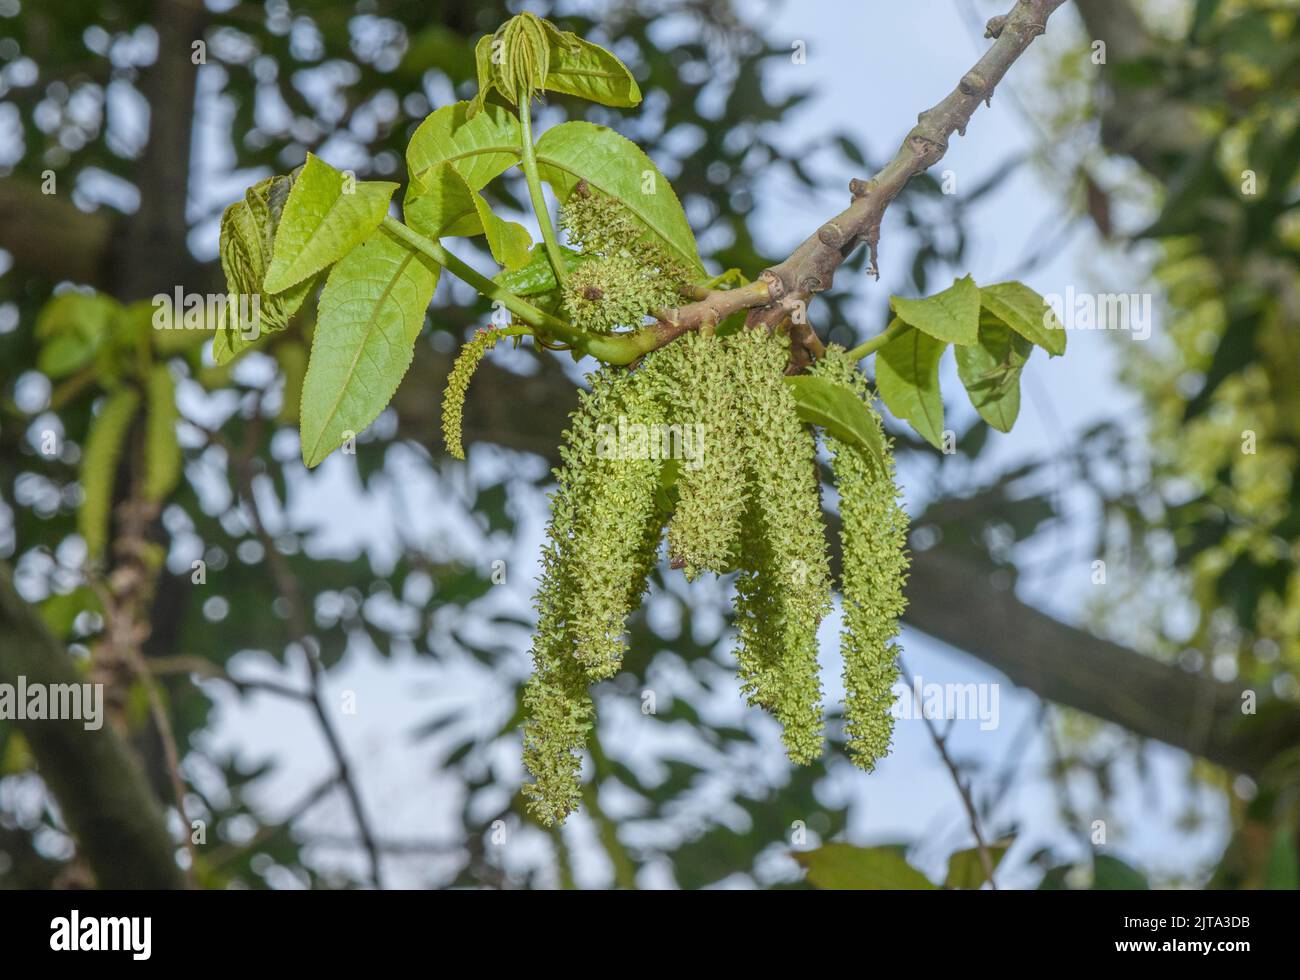 Walnut tree, Juglans regia in flower in spring, with catkins. Stock Photo